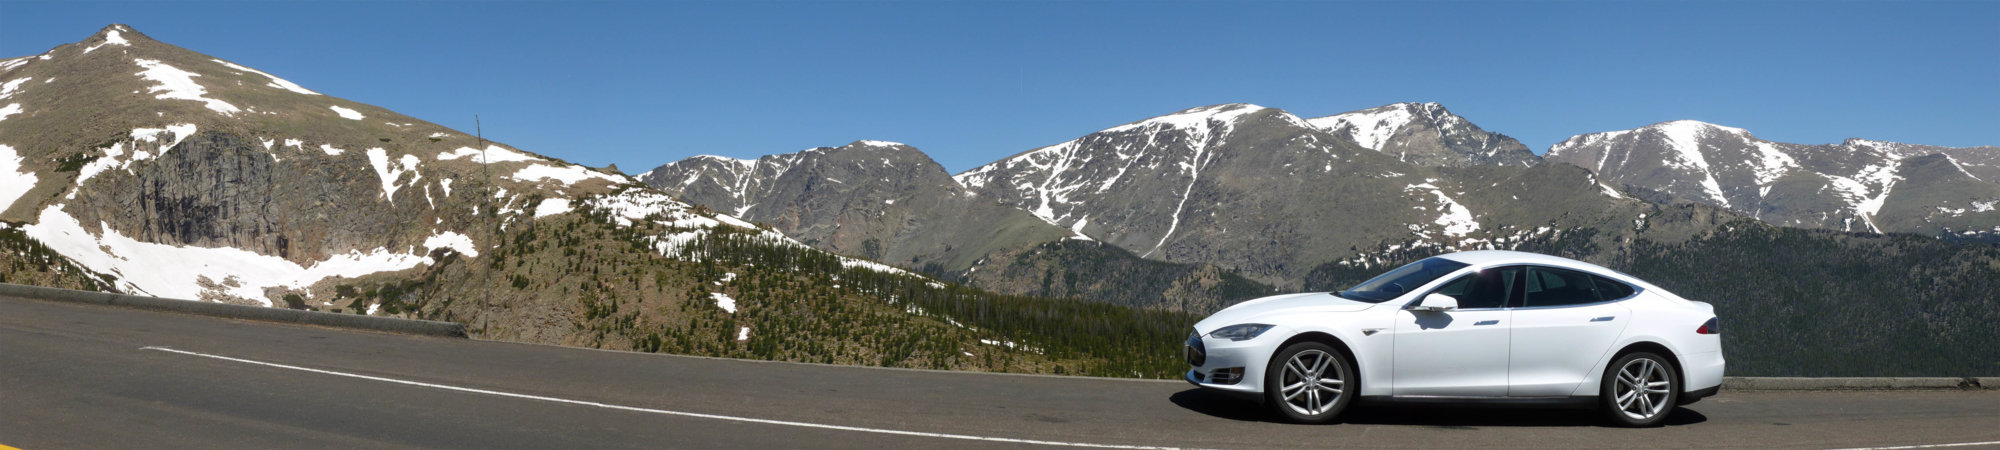 Model S in Rocky Mountain NP Panorama2038-41sf 6-4-18.JPG